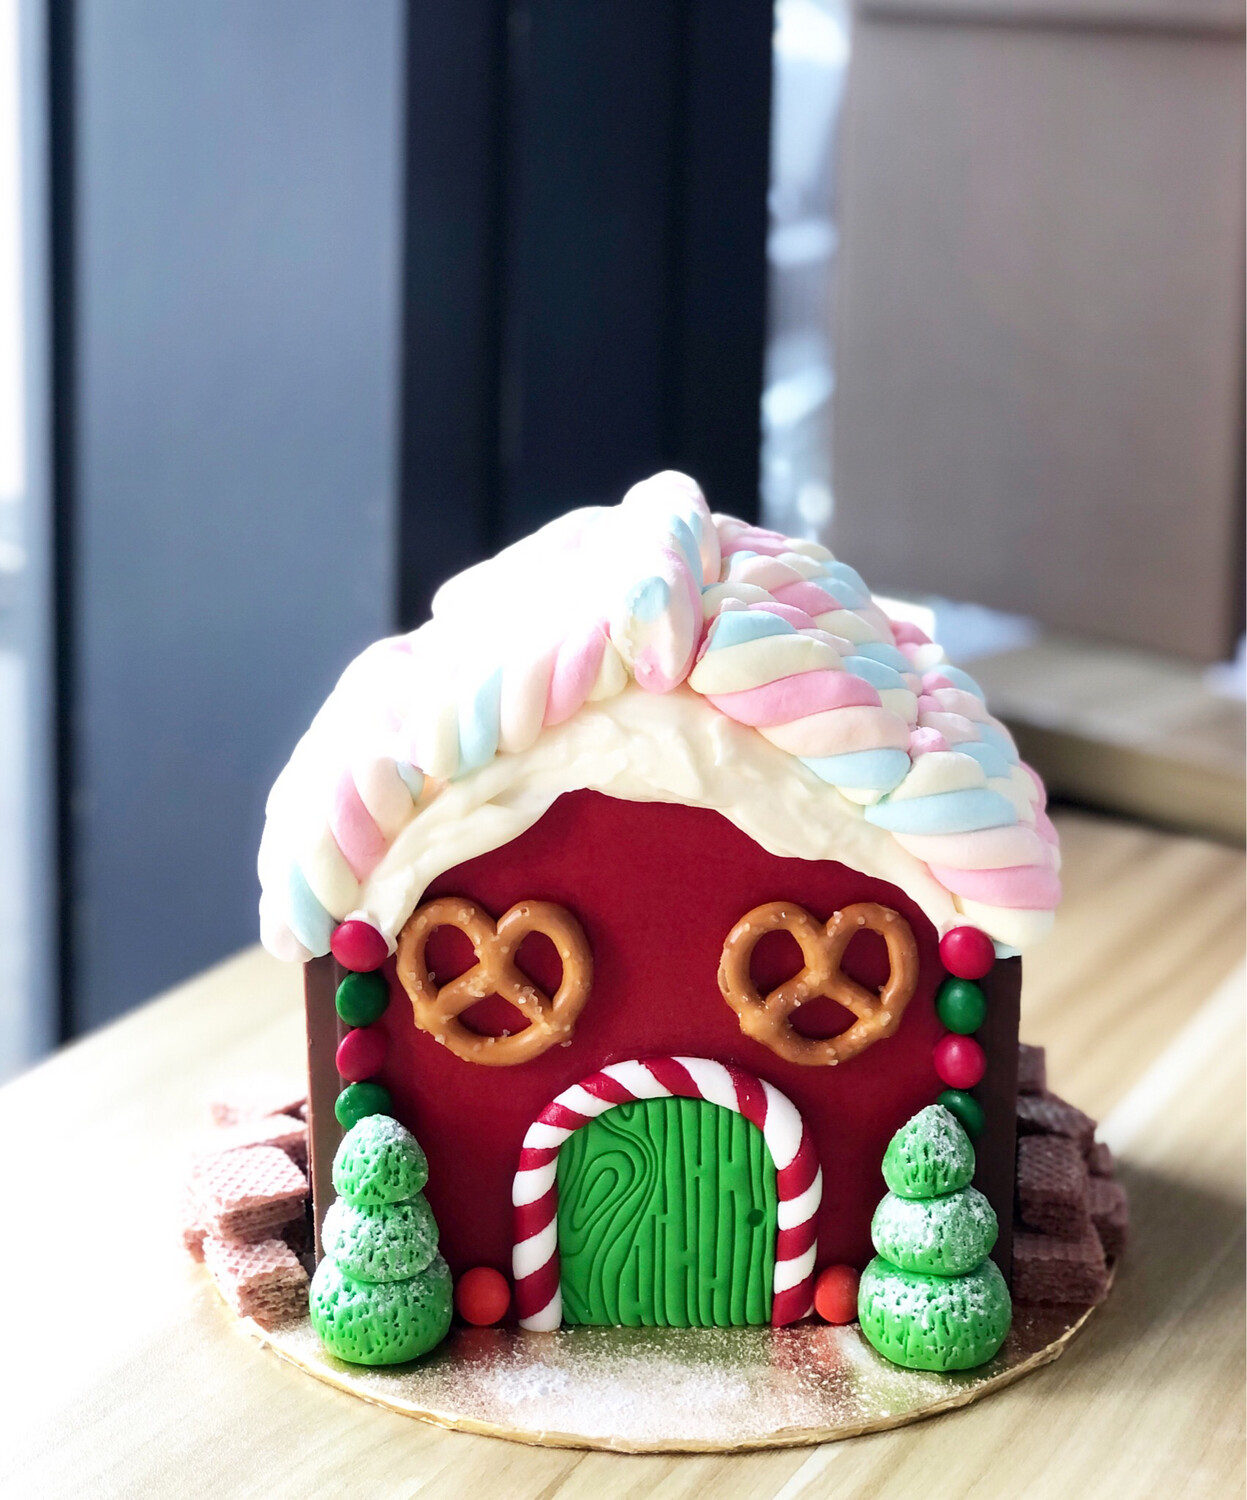 Festive - Christmas / Xmas / Candy House